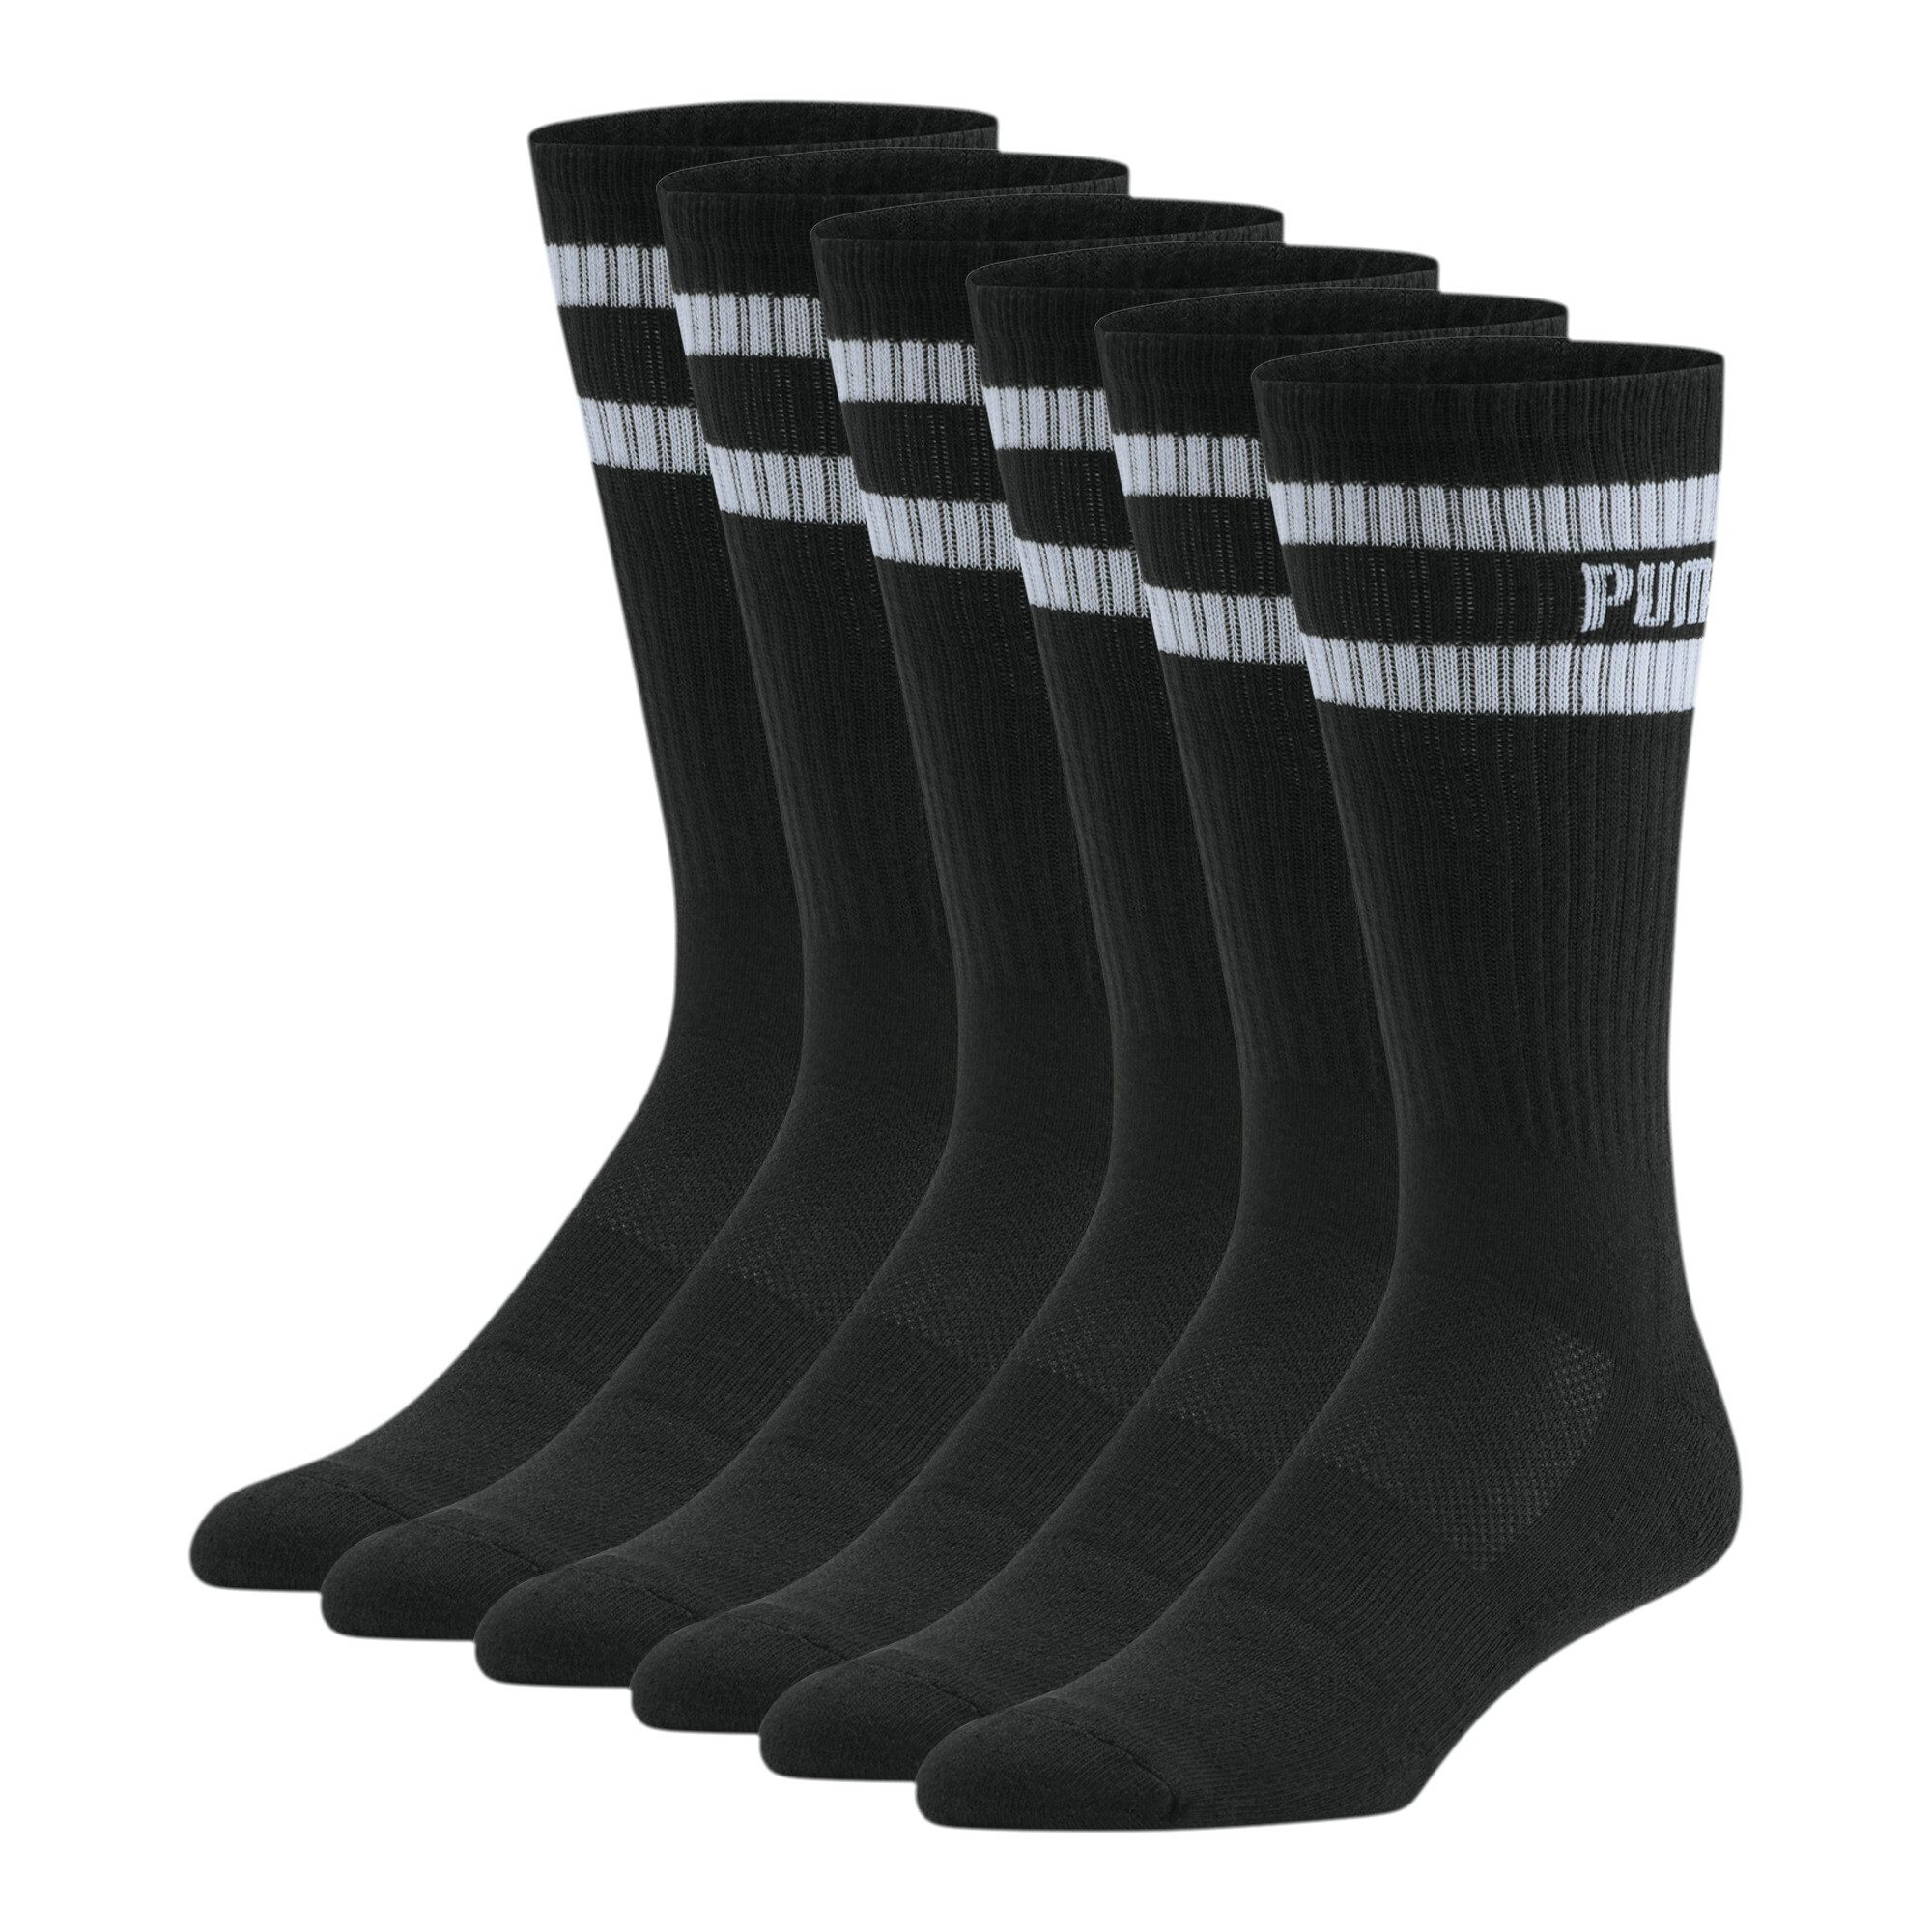 PUMA Men's Crew Socks  Black Size 10-13